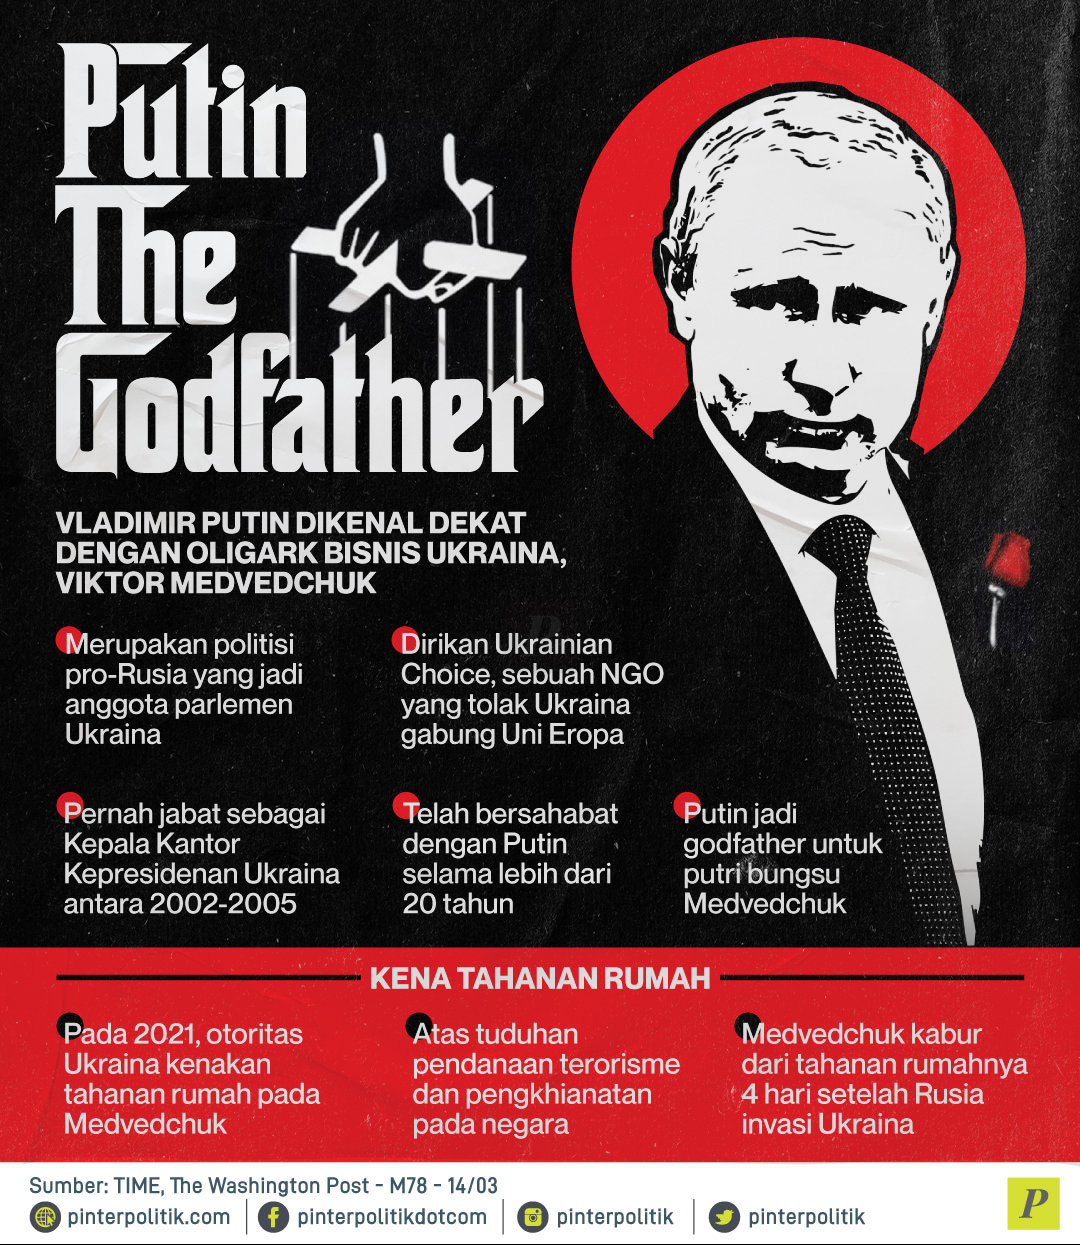 Putin the Godfather